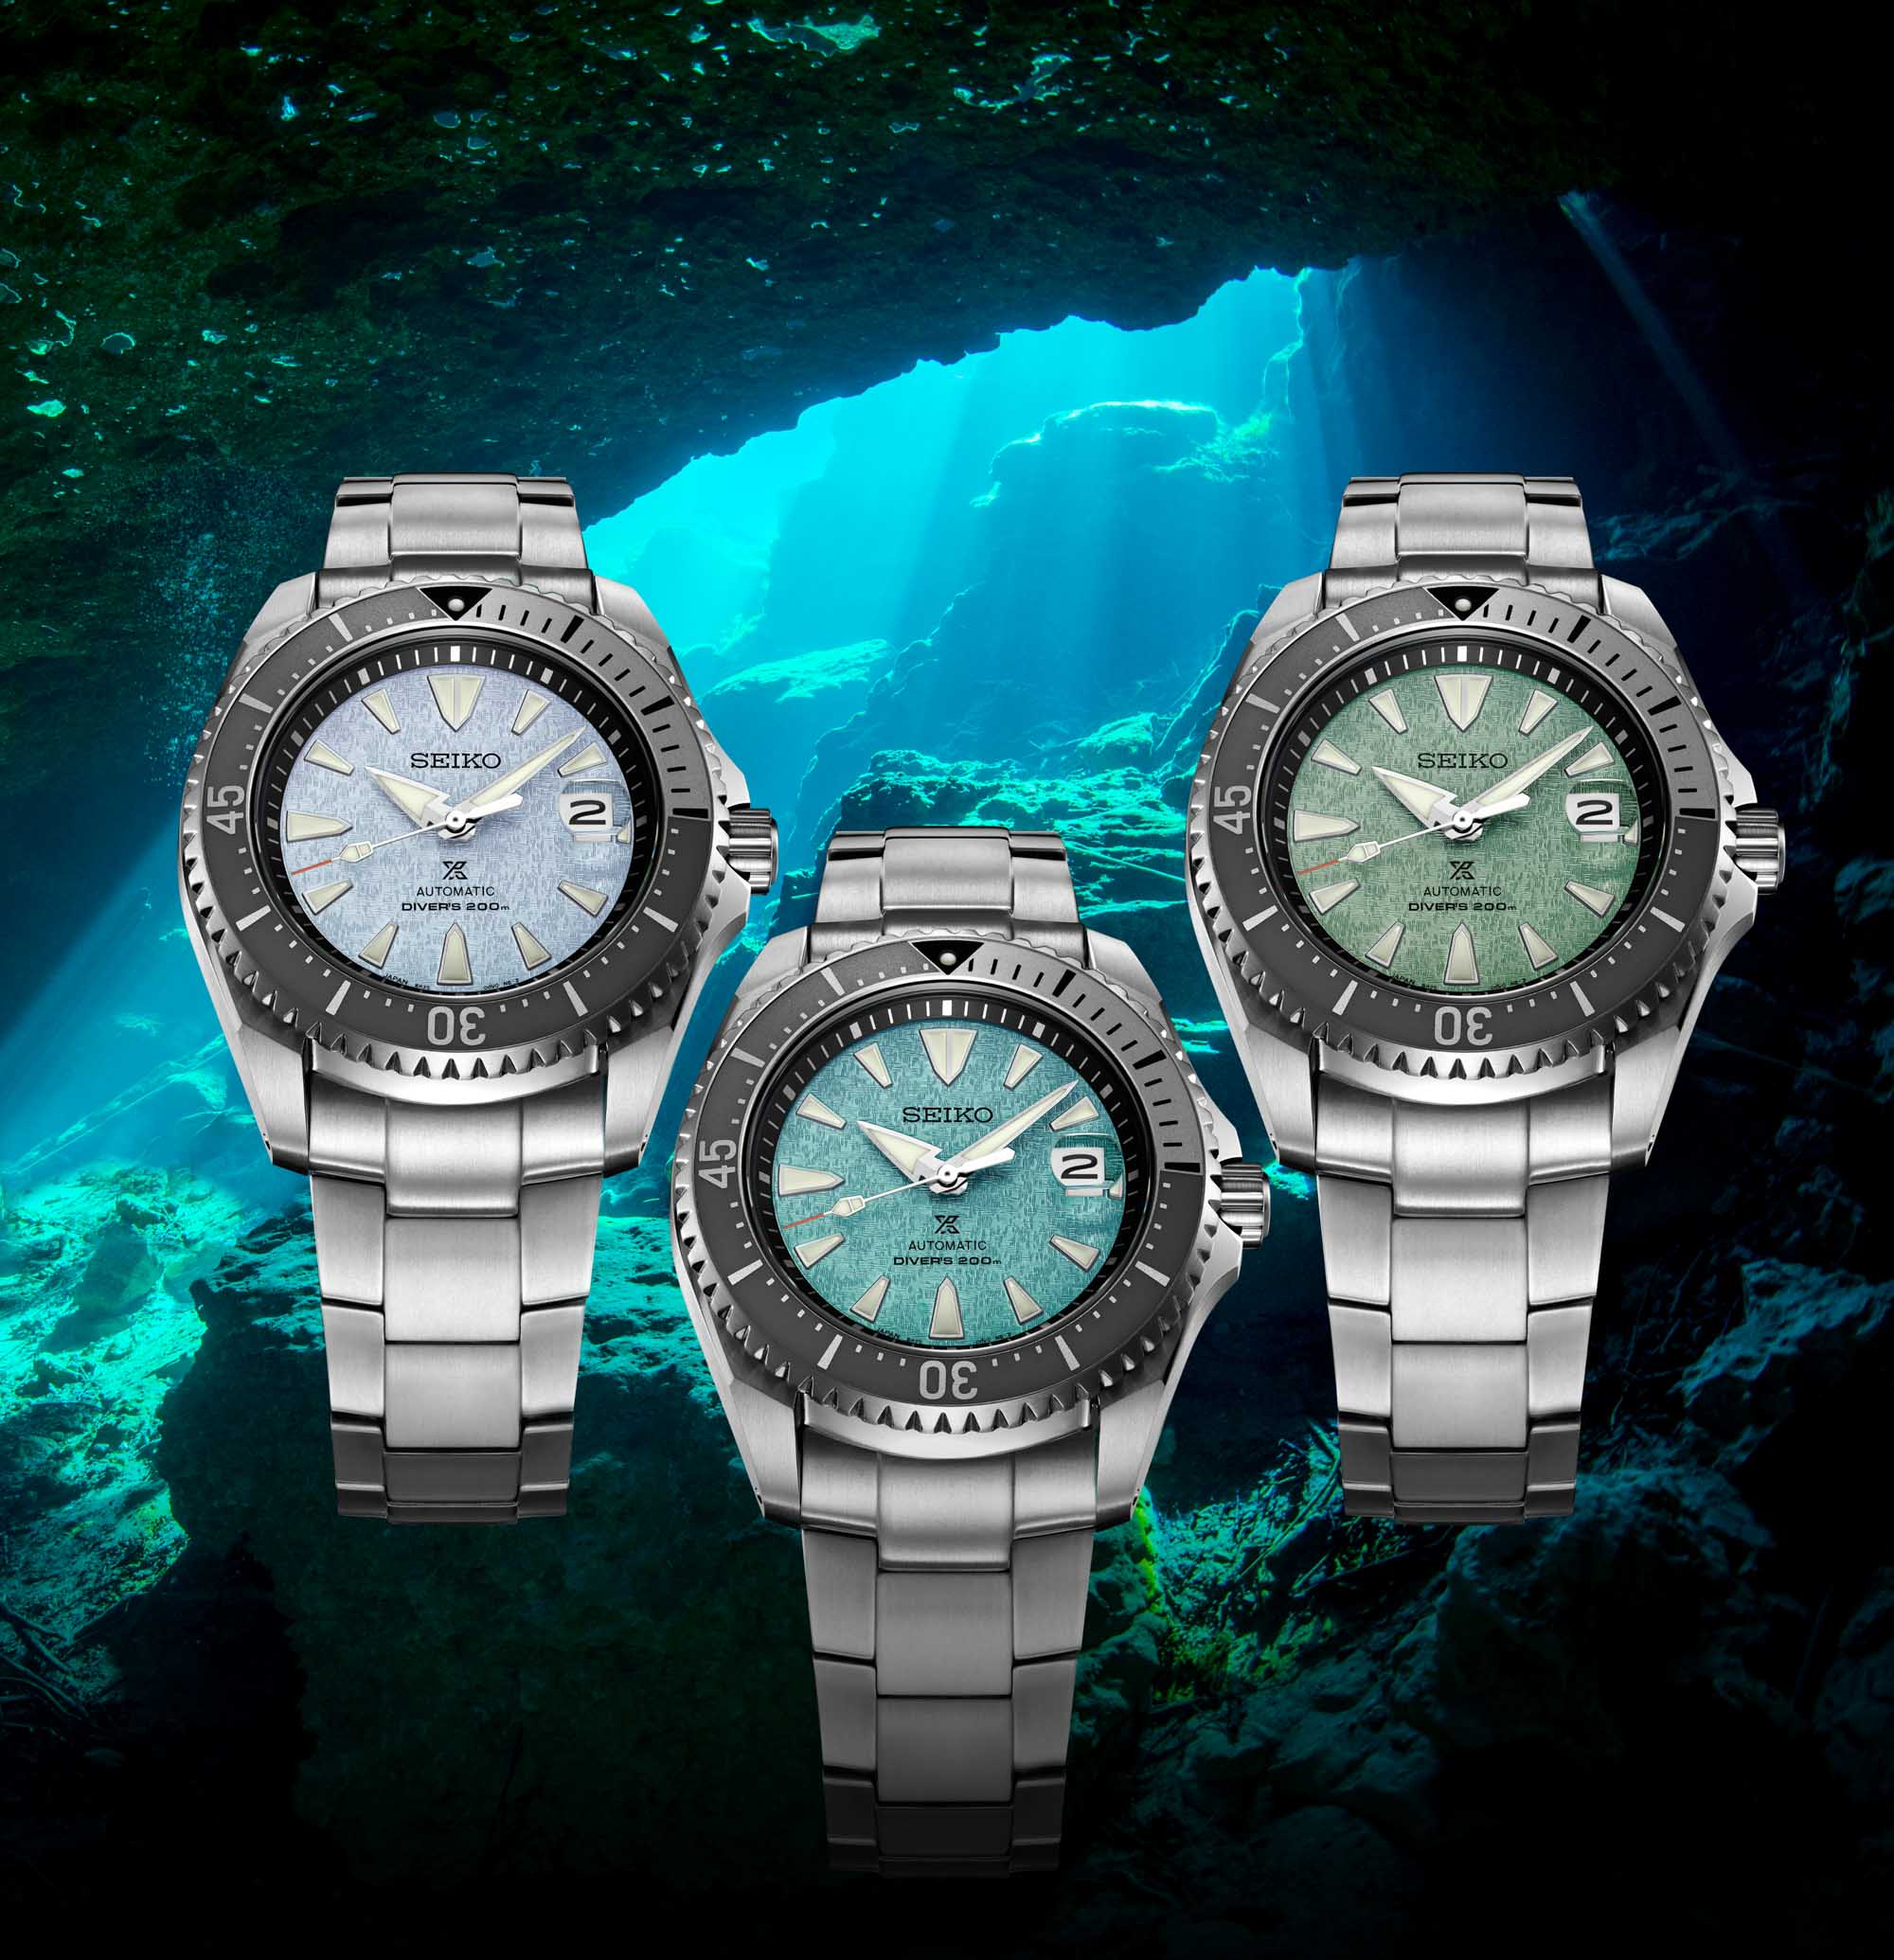 Introducing Seiko Prospex . Special Edition “Shogun” Dive Watches